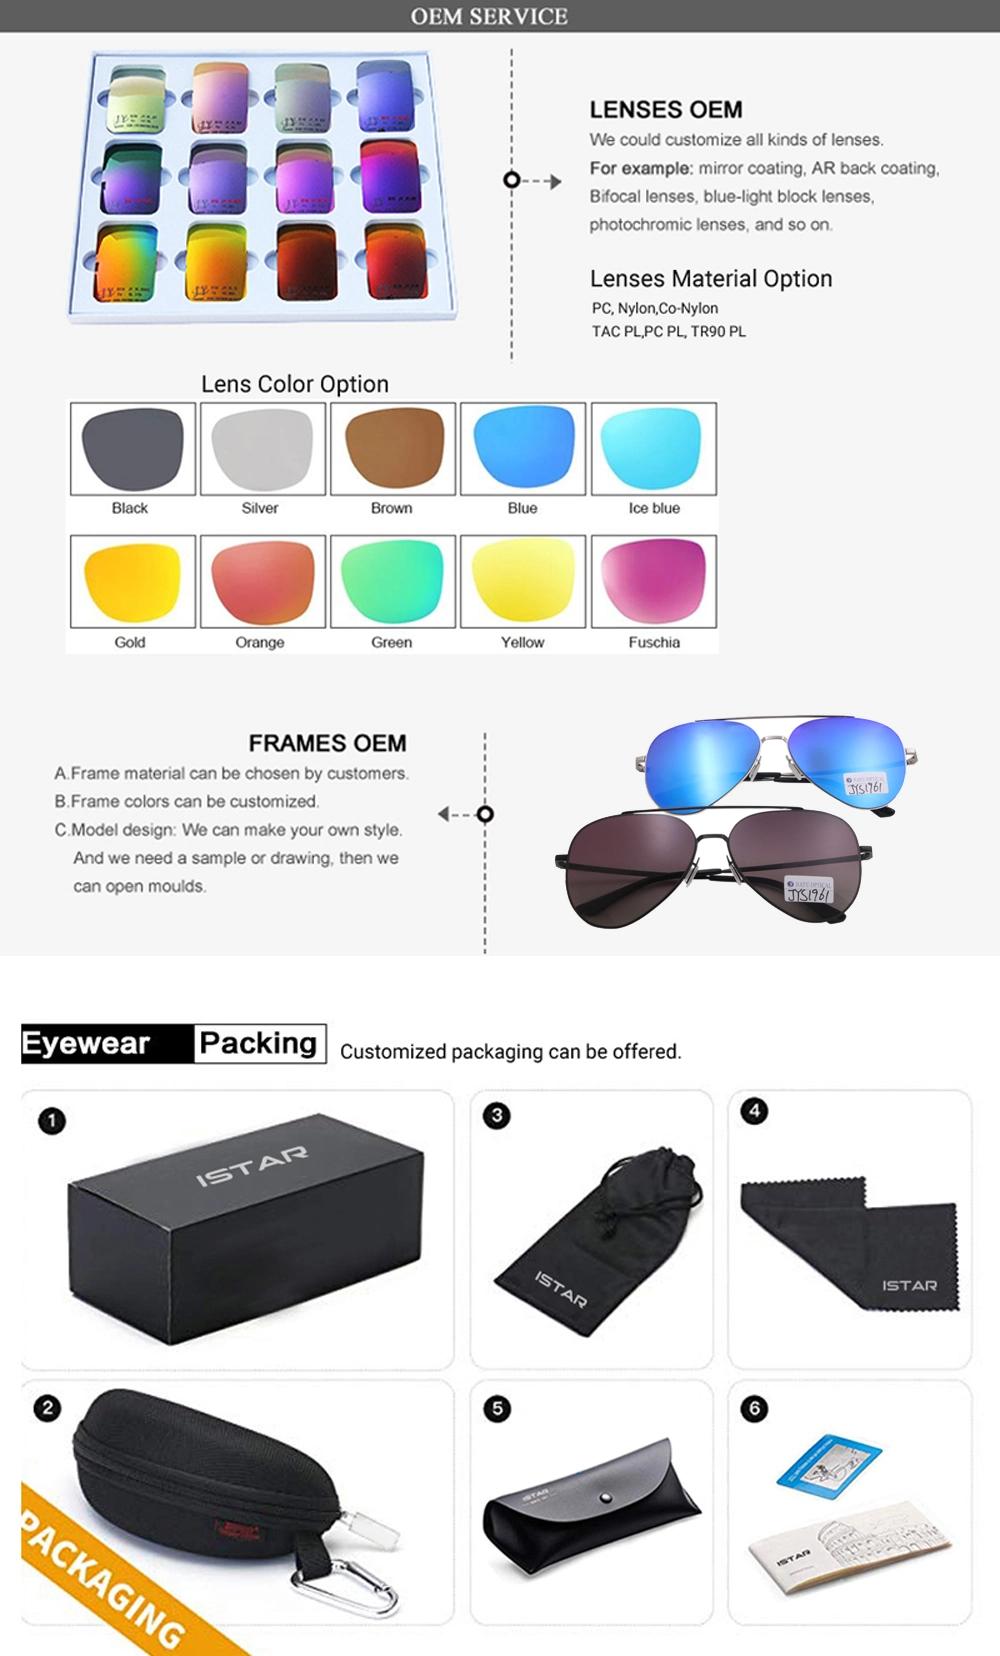 2022 Designer Semi-Frame Irregular Lenses High Quality Lady Metal Sunglasses